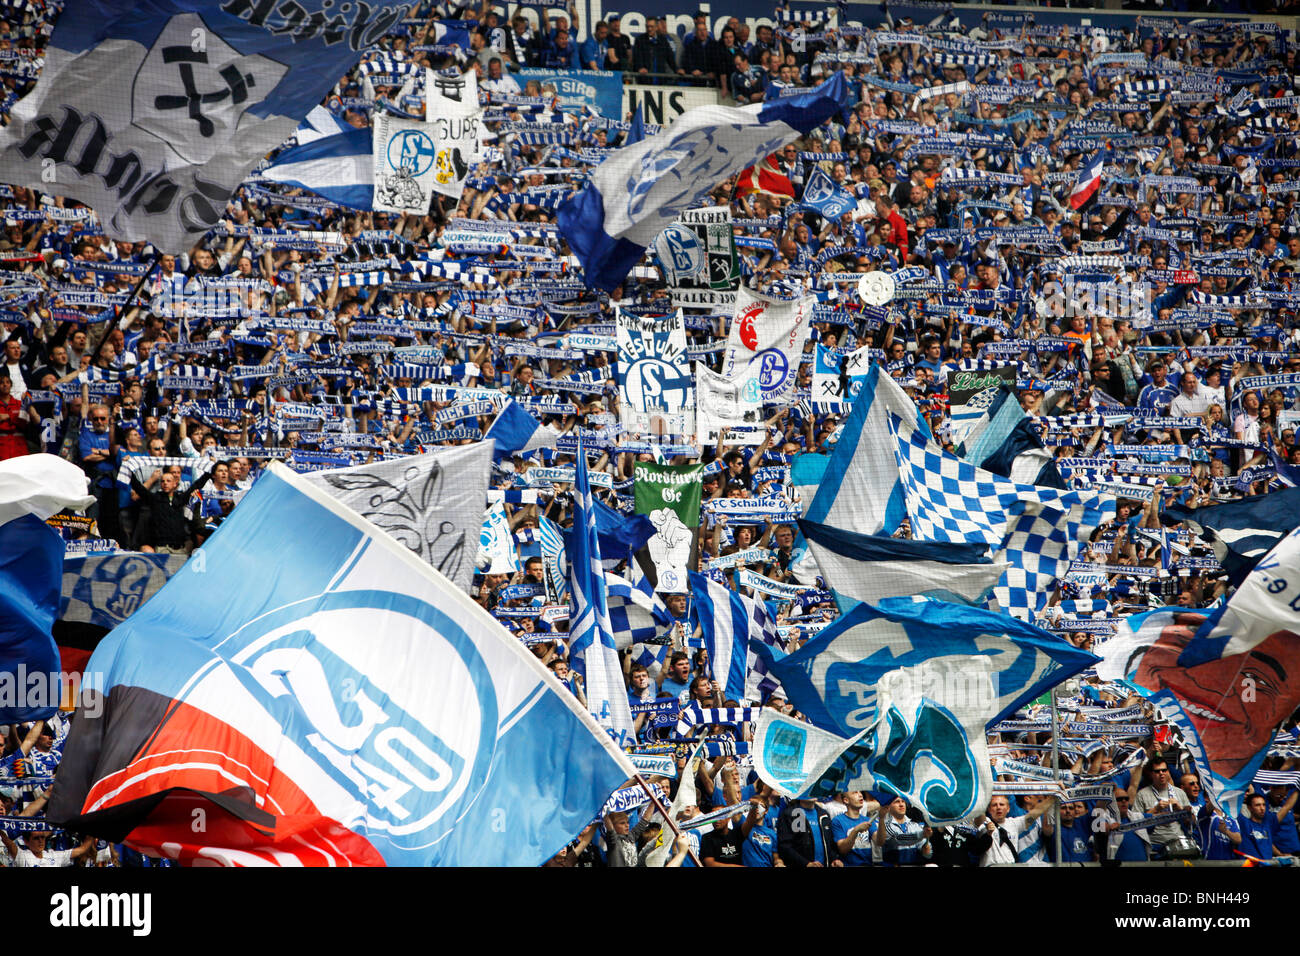 Football, soccer, supporter of German major league football club Schalke 04, in the Veltins Arena stadium. Stock Photo